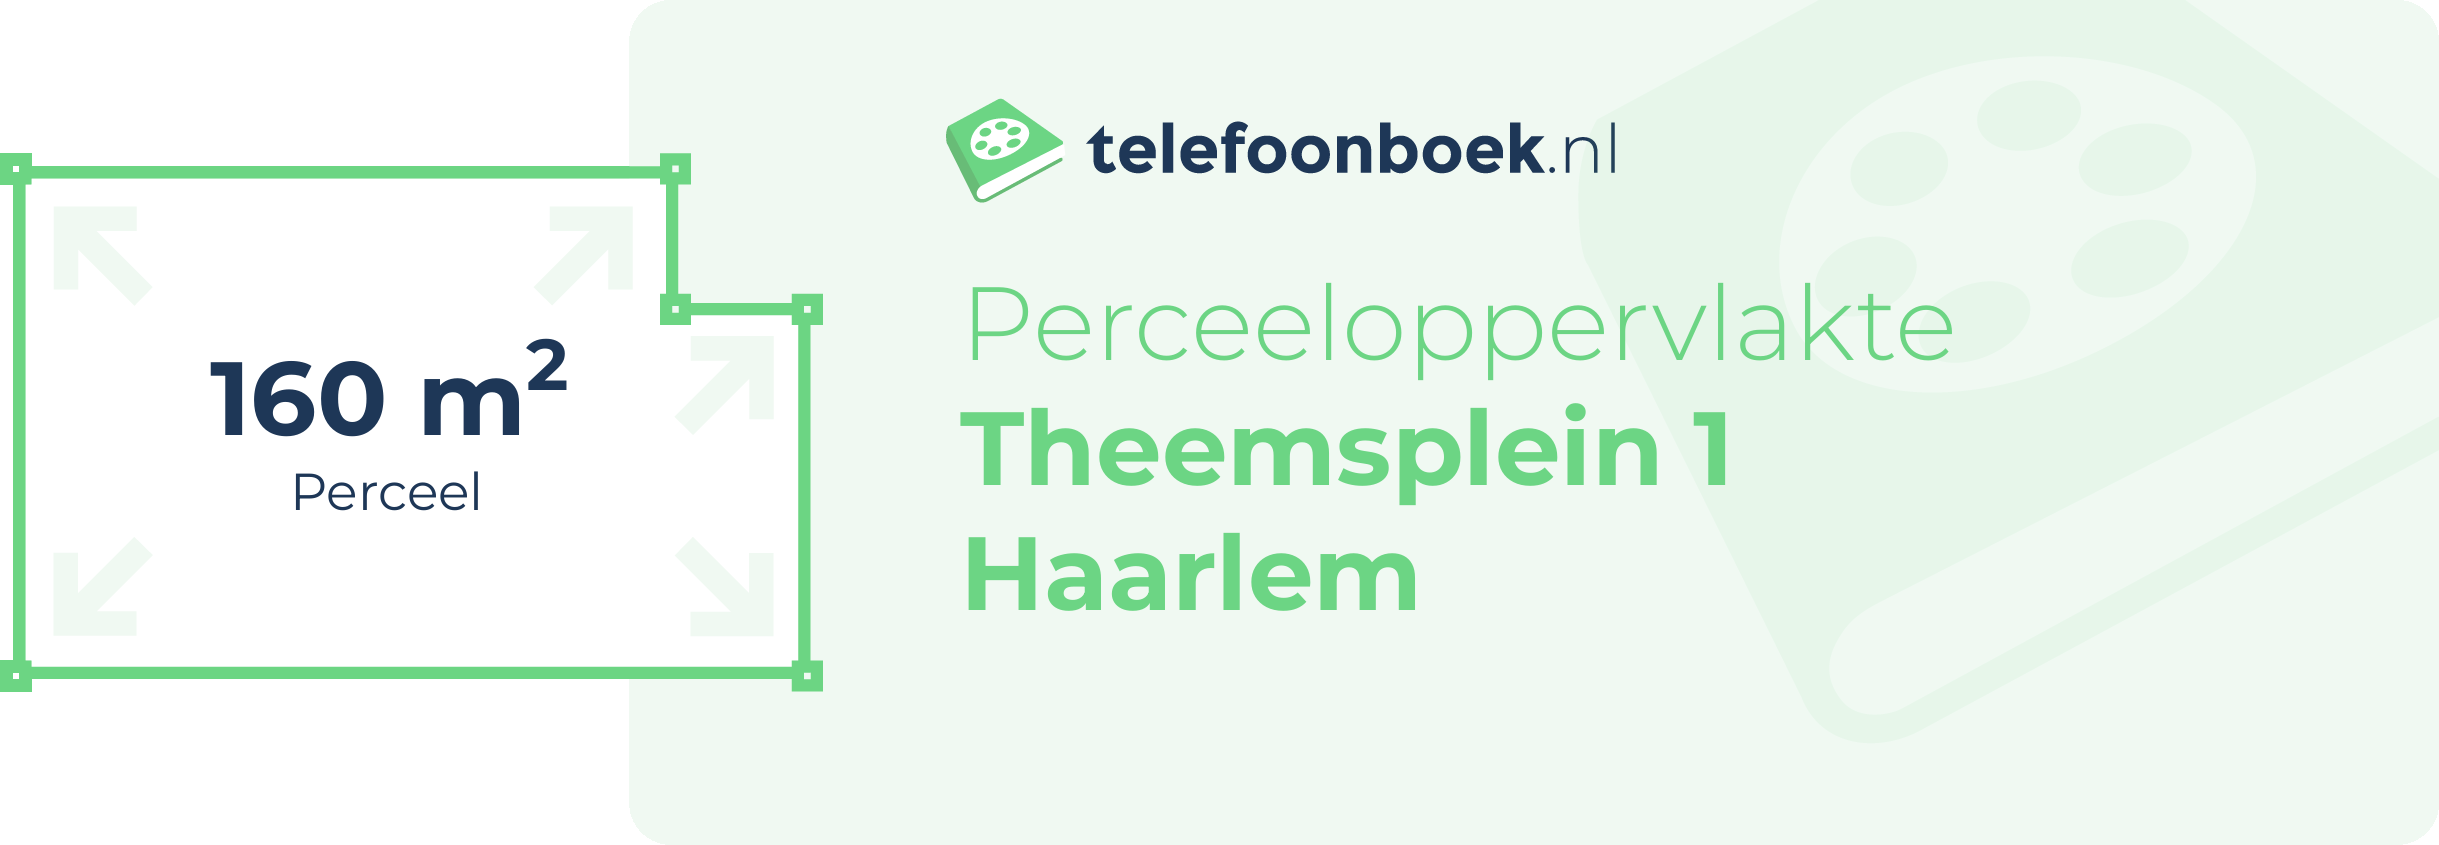 Perceeloppervlakte Theemsplein 1 Haarlem